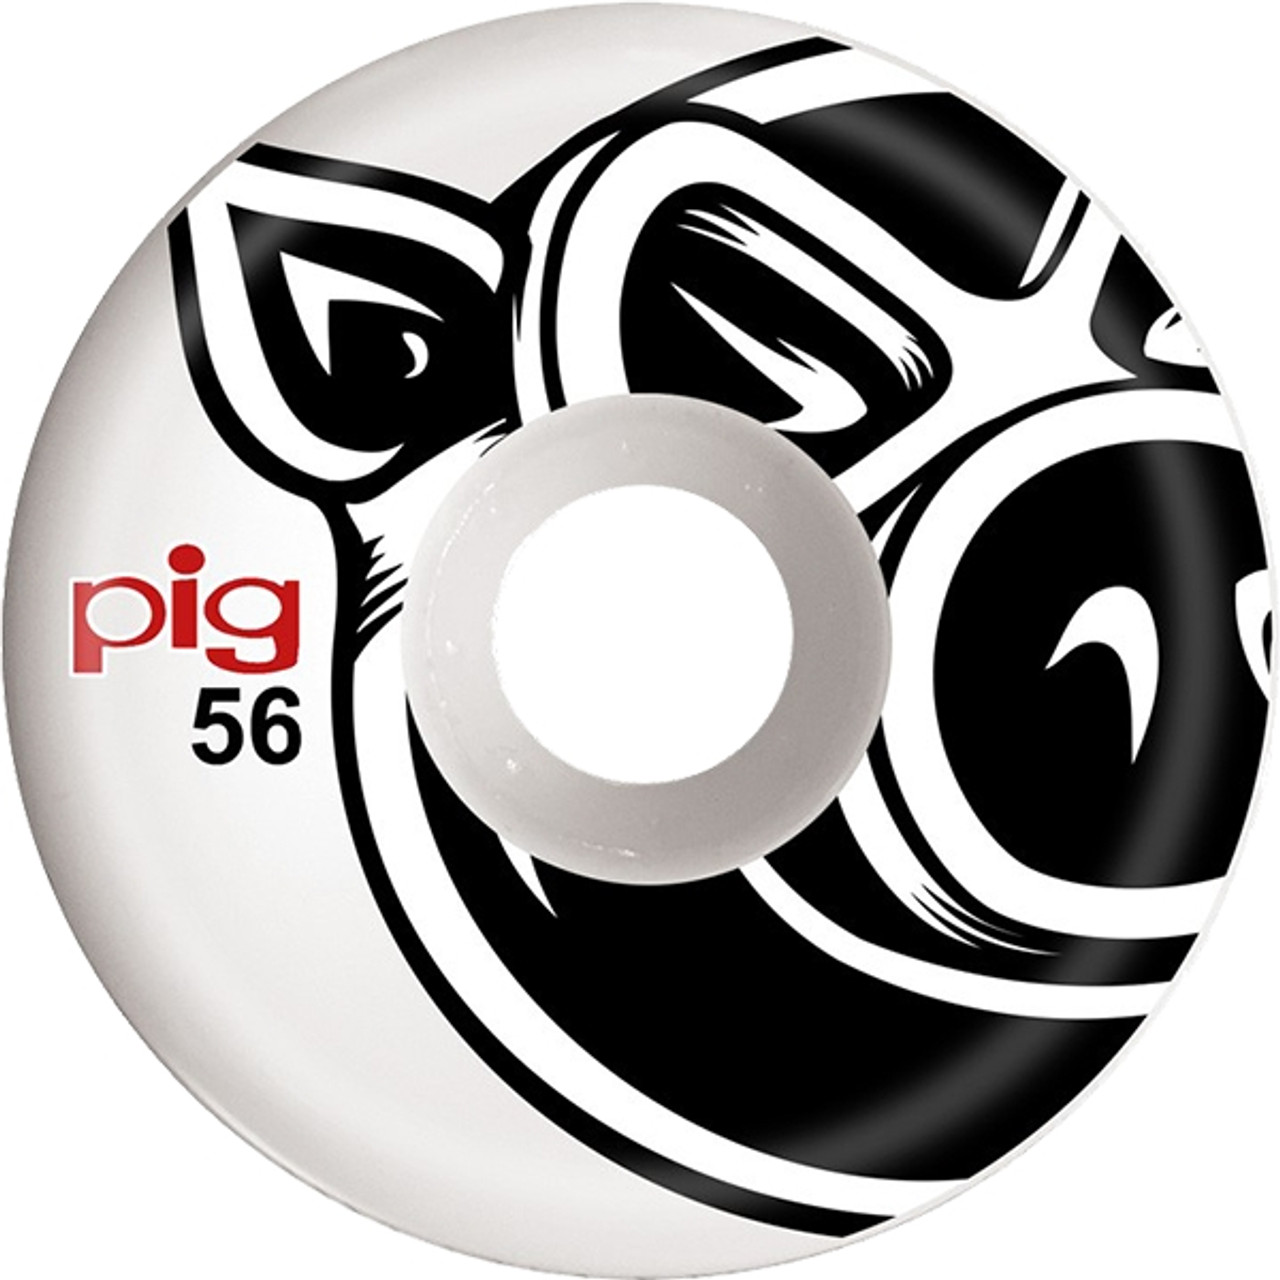 PIG HEAD CONICAL 56mm 101a WHITE WHEELS SET